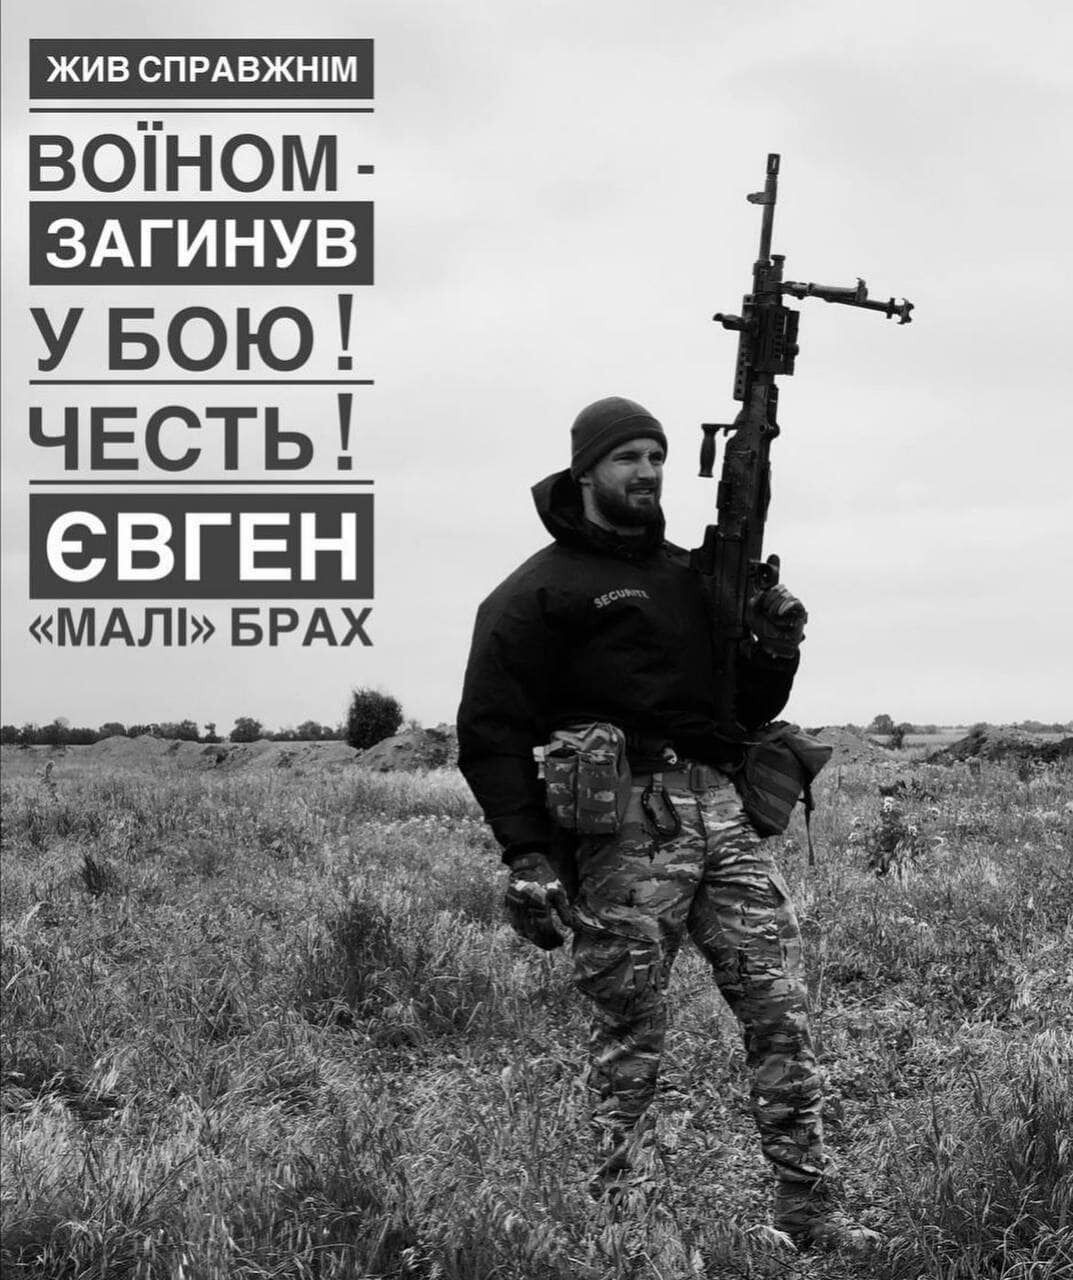 Євген Брах загинув, захищаючи Україну